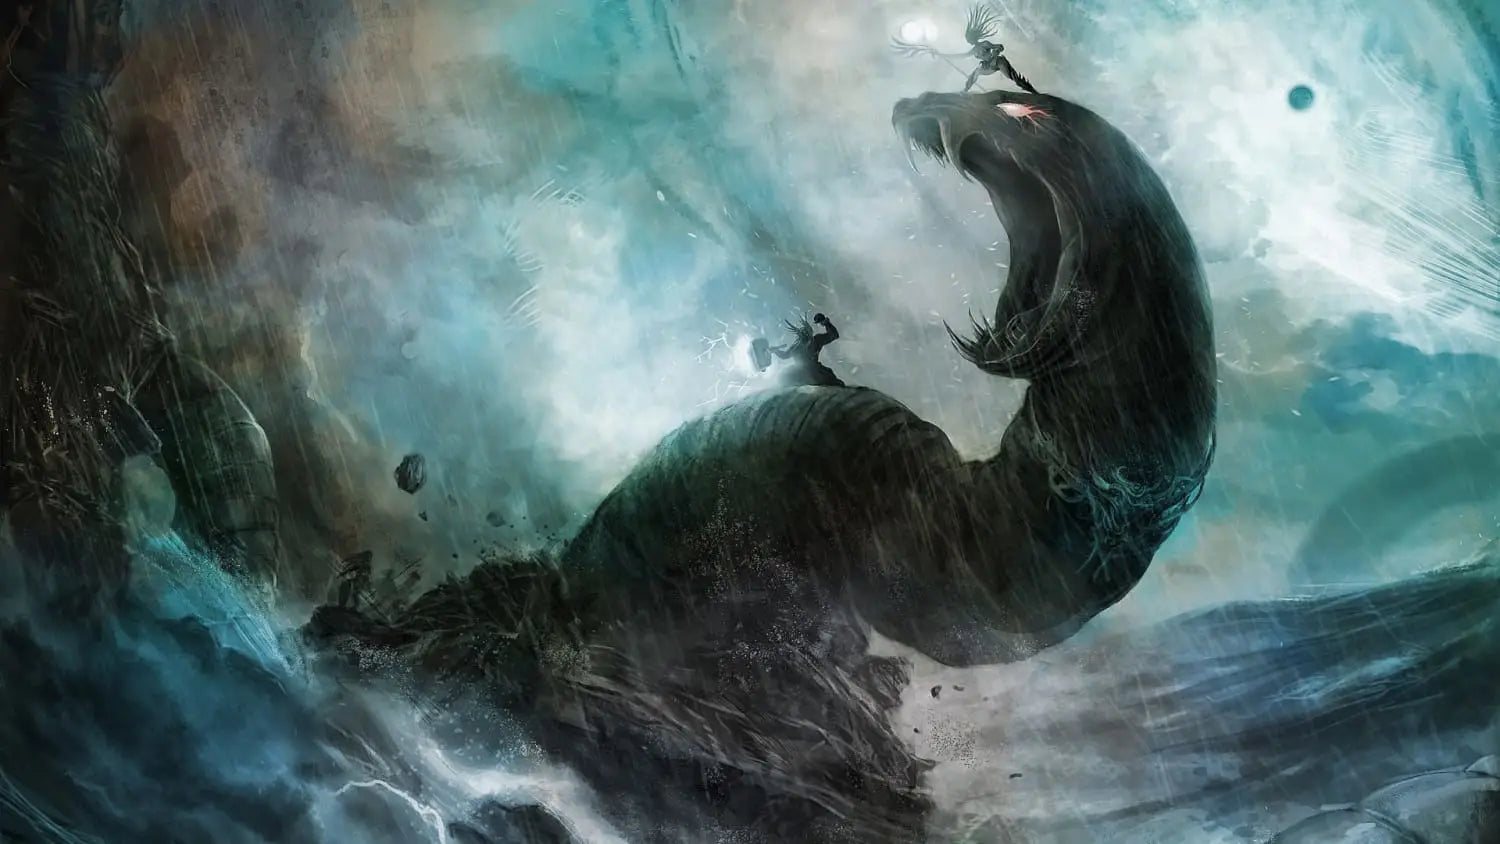 Jormungandr | The Serpent of Midgard